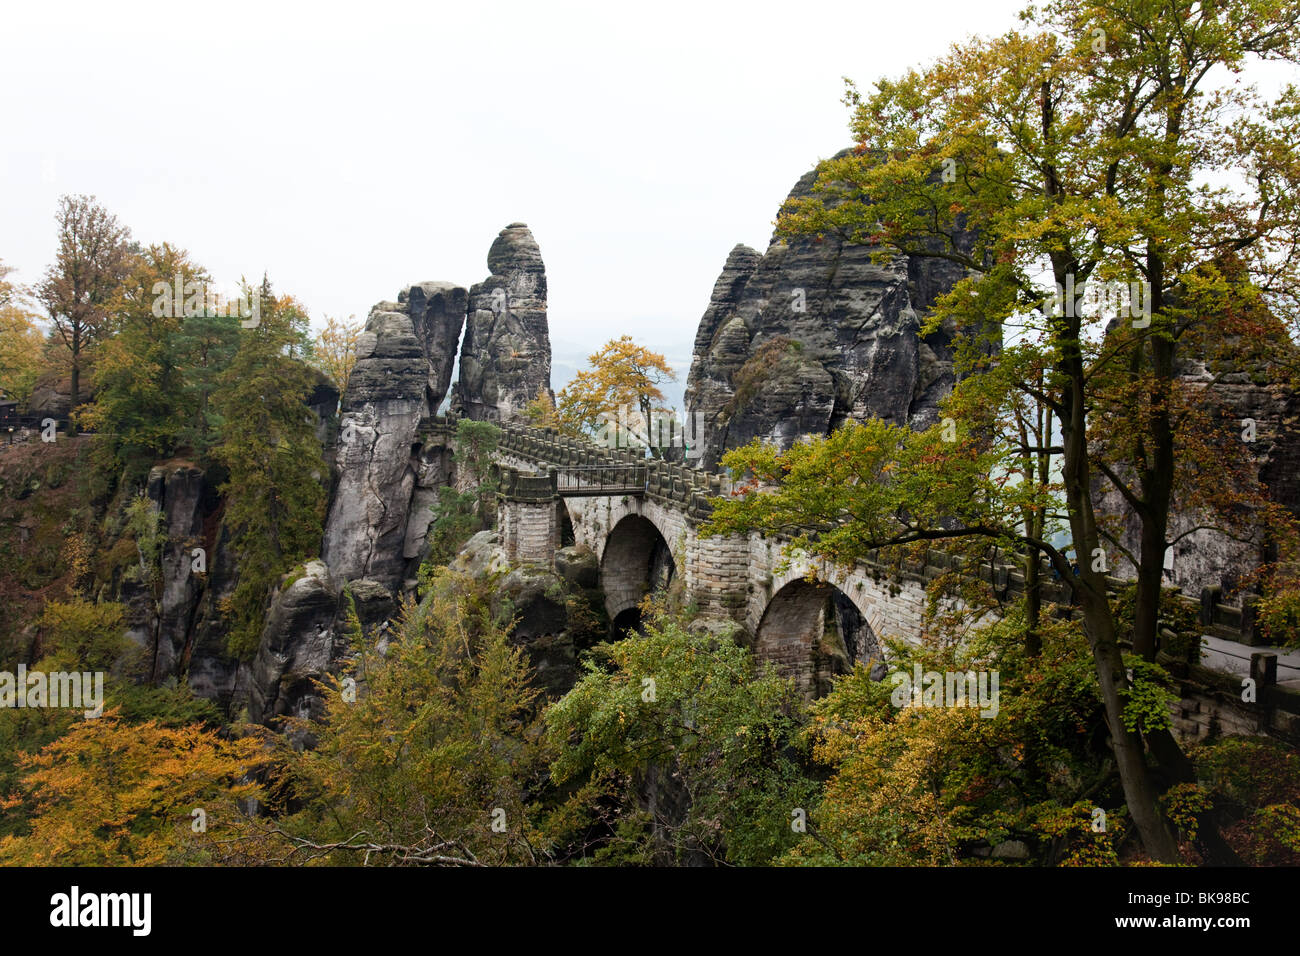 Rock massive of Bastei in National Park Sächsische Schweiz, Germany, in autumn Stock Photo